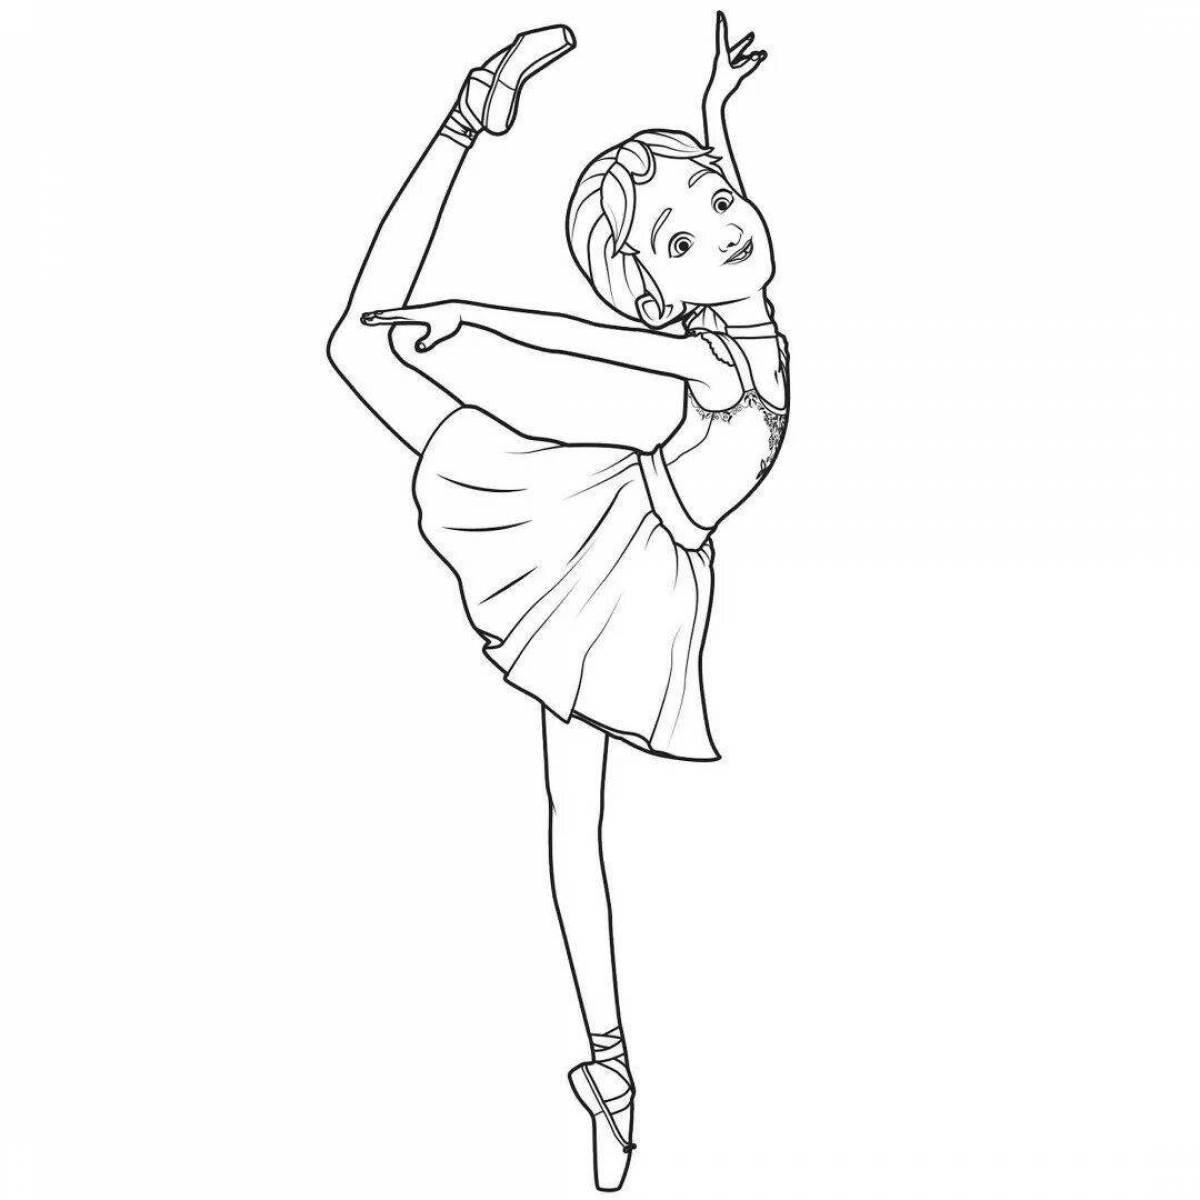 Coloring page festive ballerina